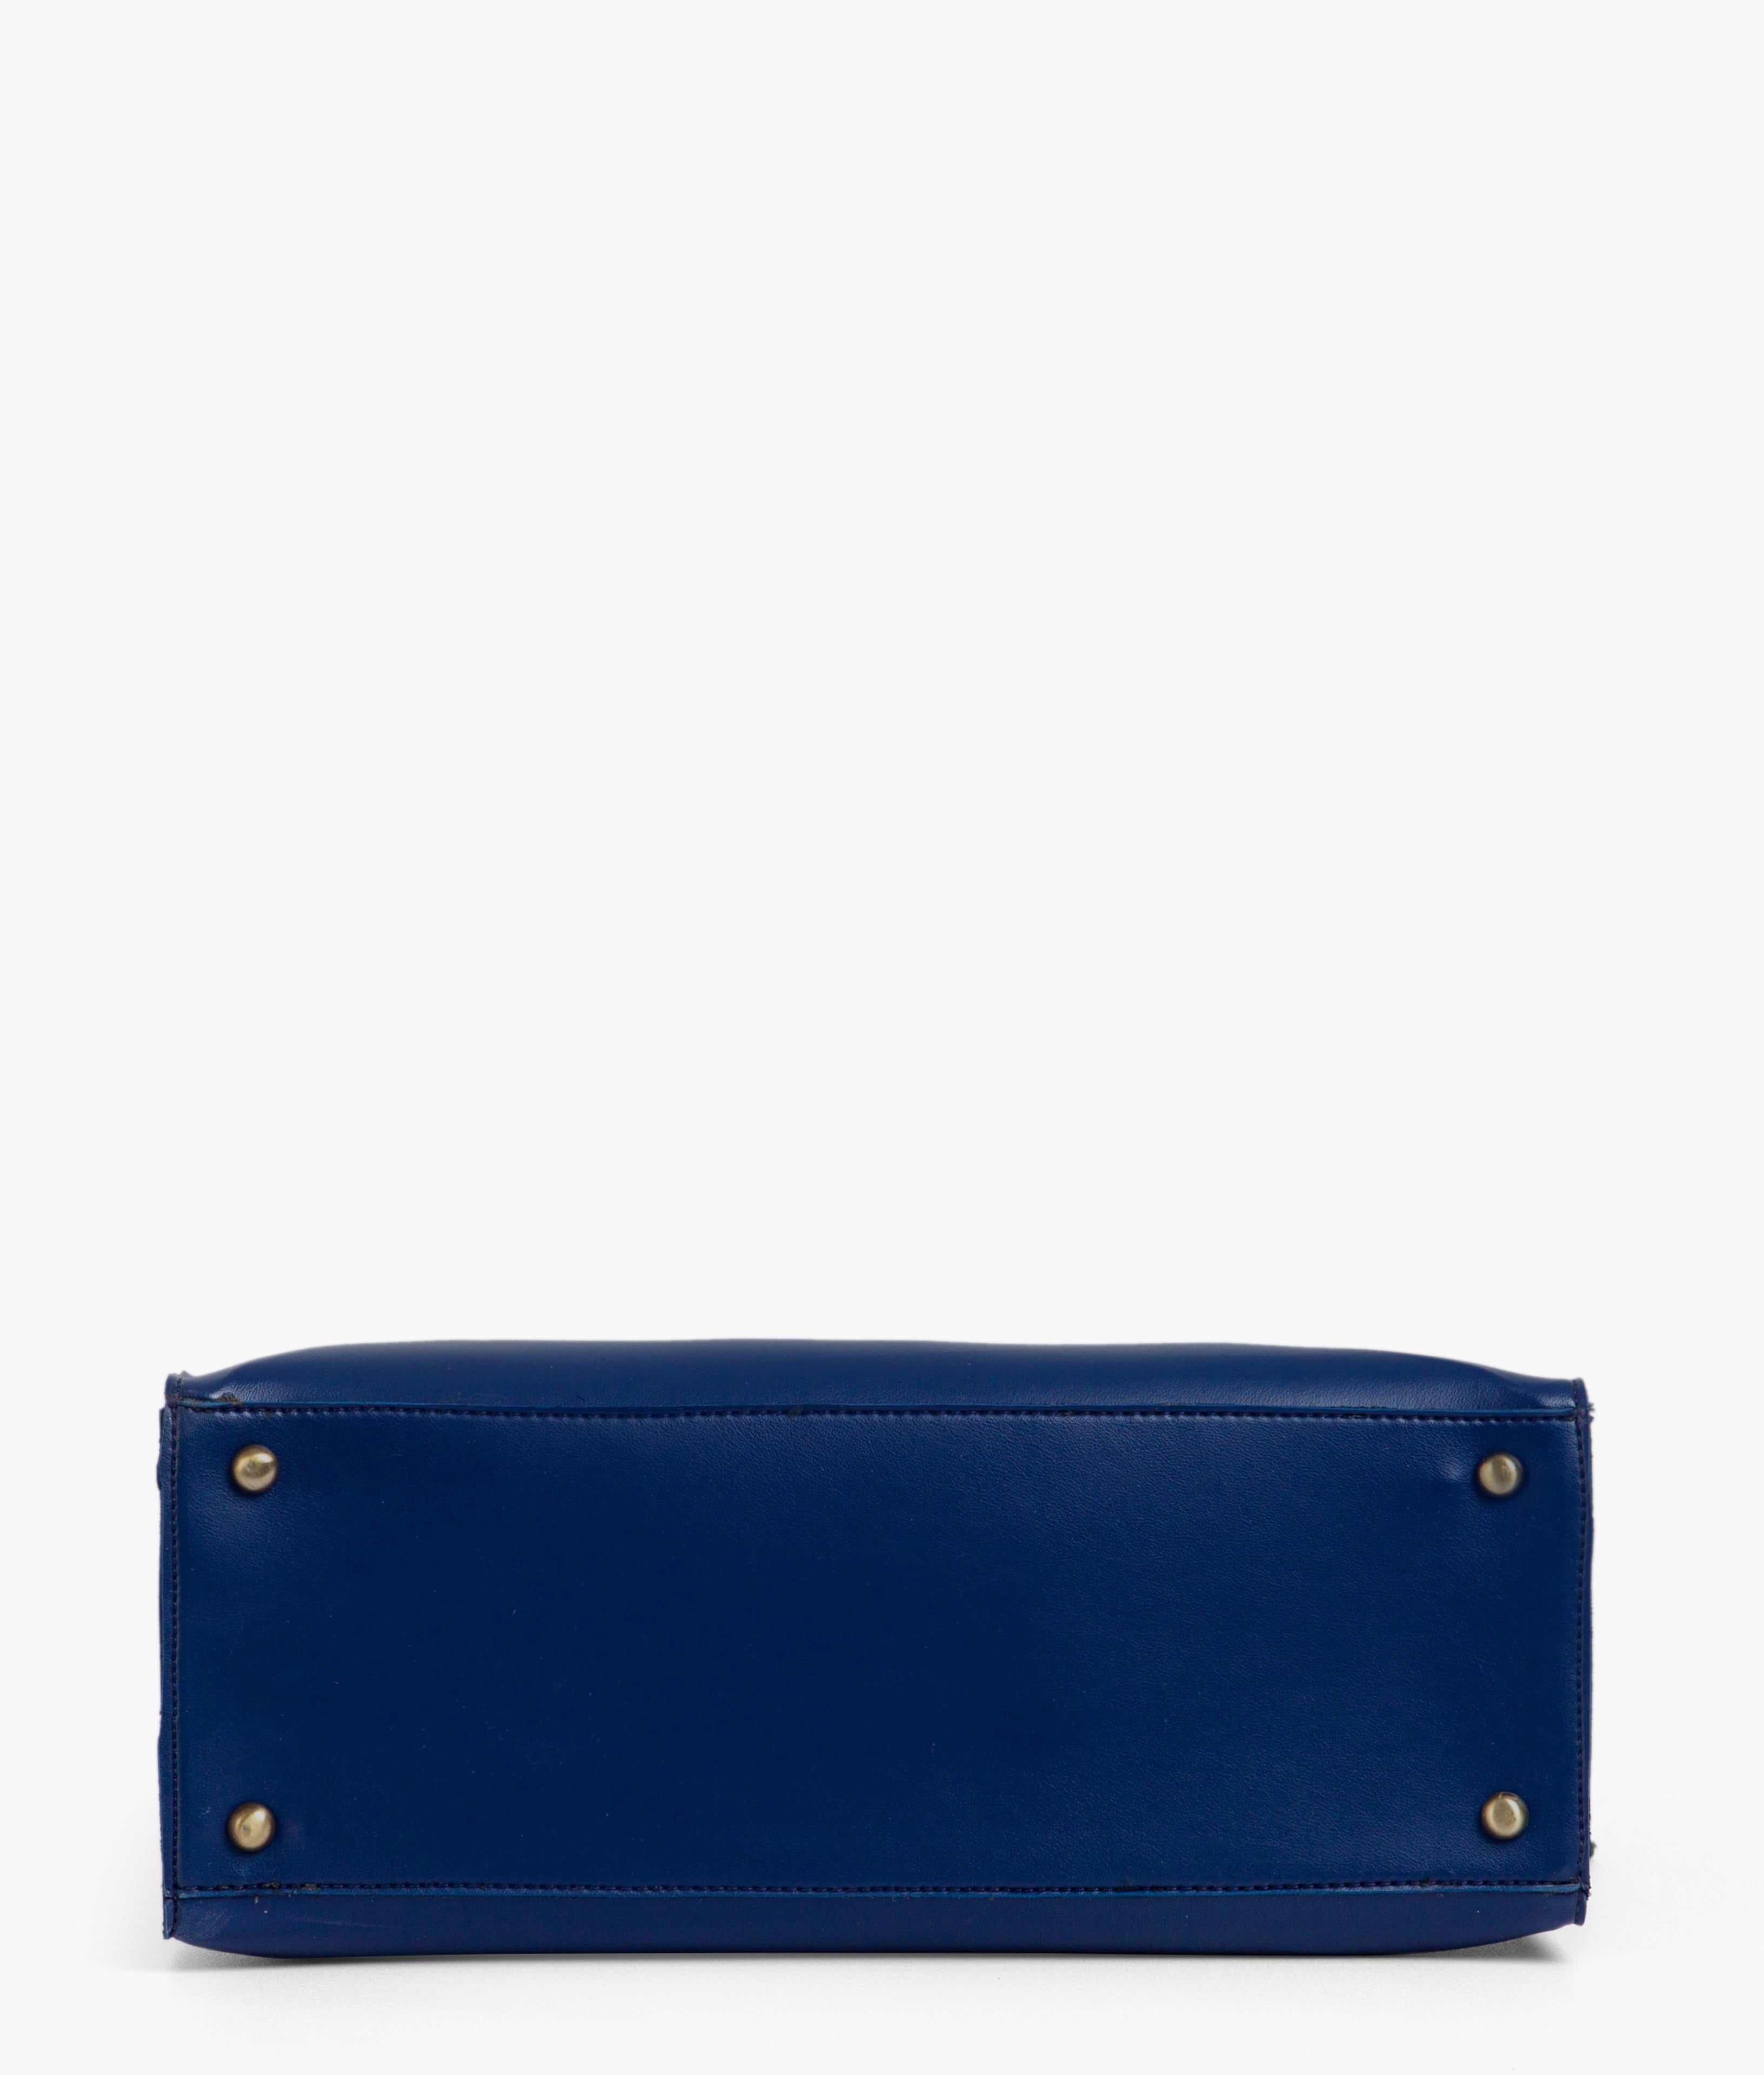 Blue workplace handbag